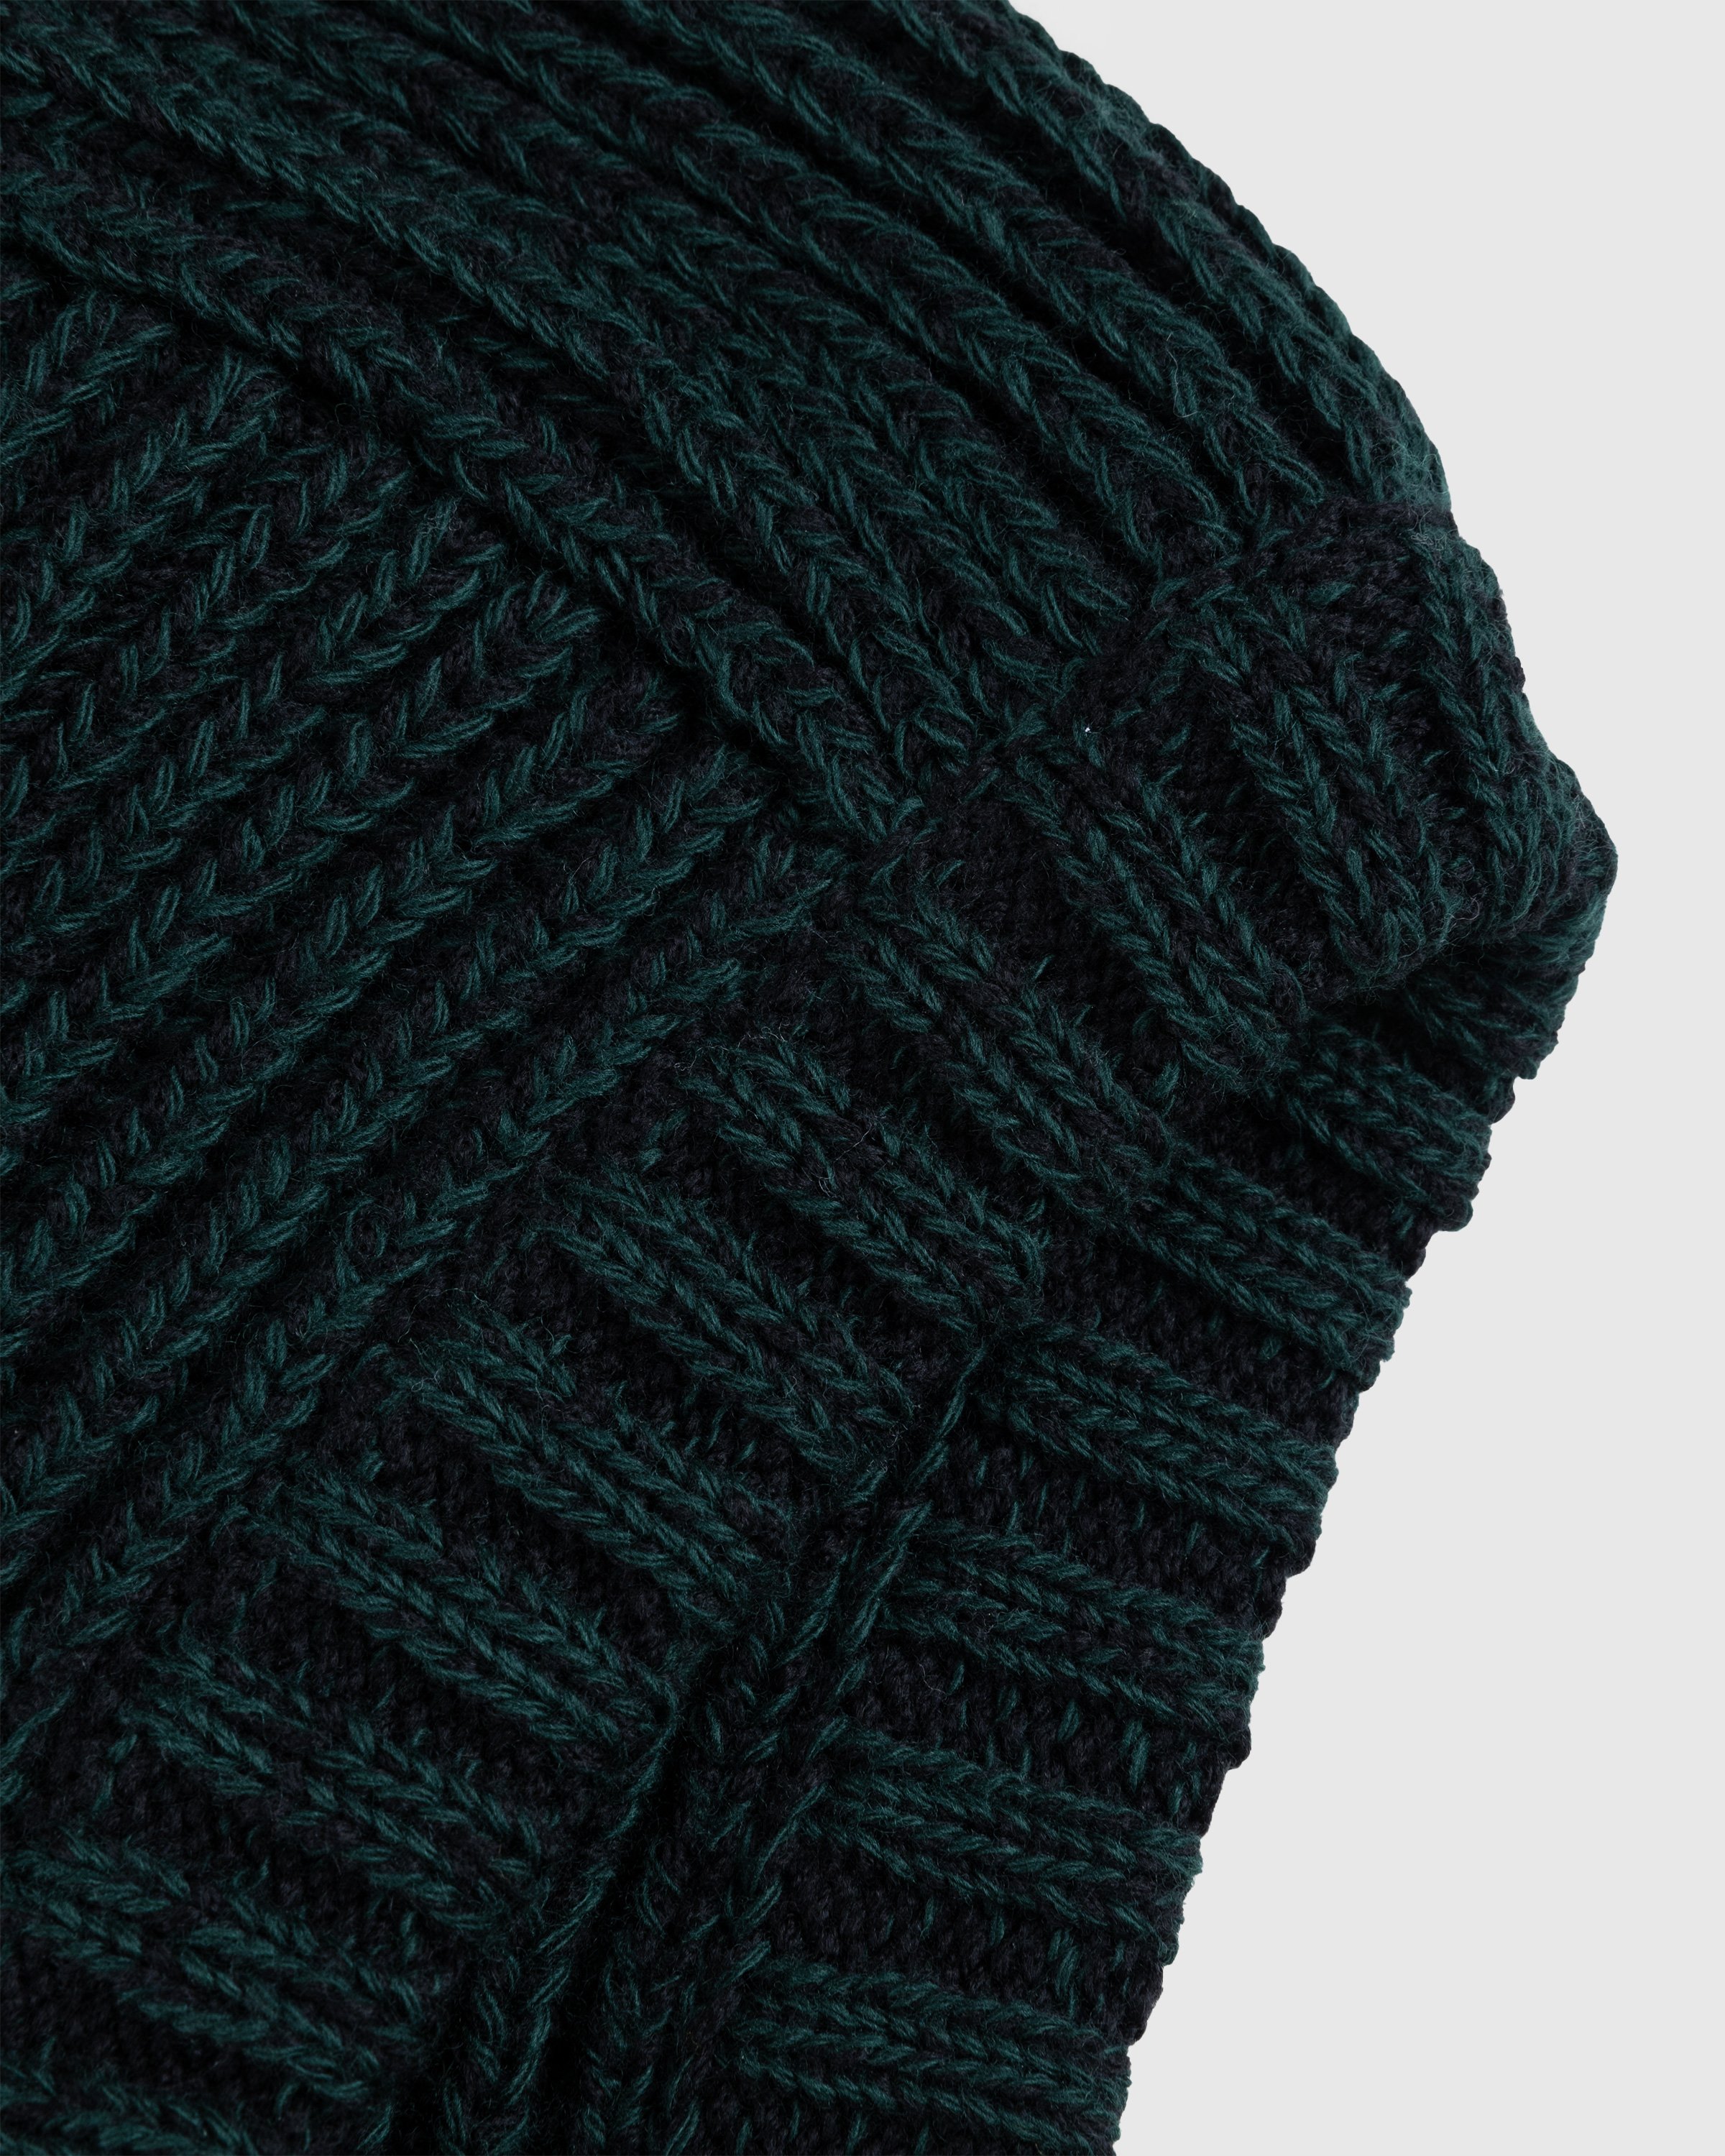 Missoni - Wool Balaclava Green/Black/White - Accessories - Multi - Image 5